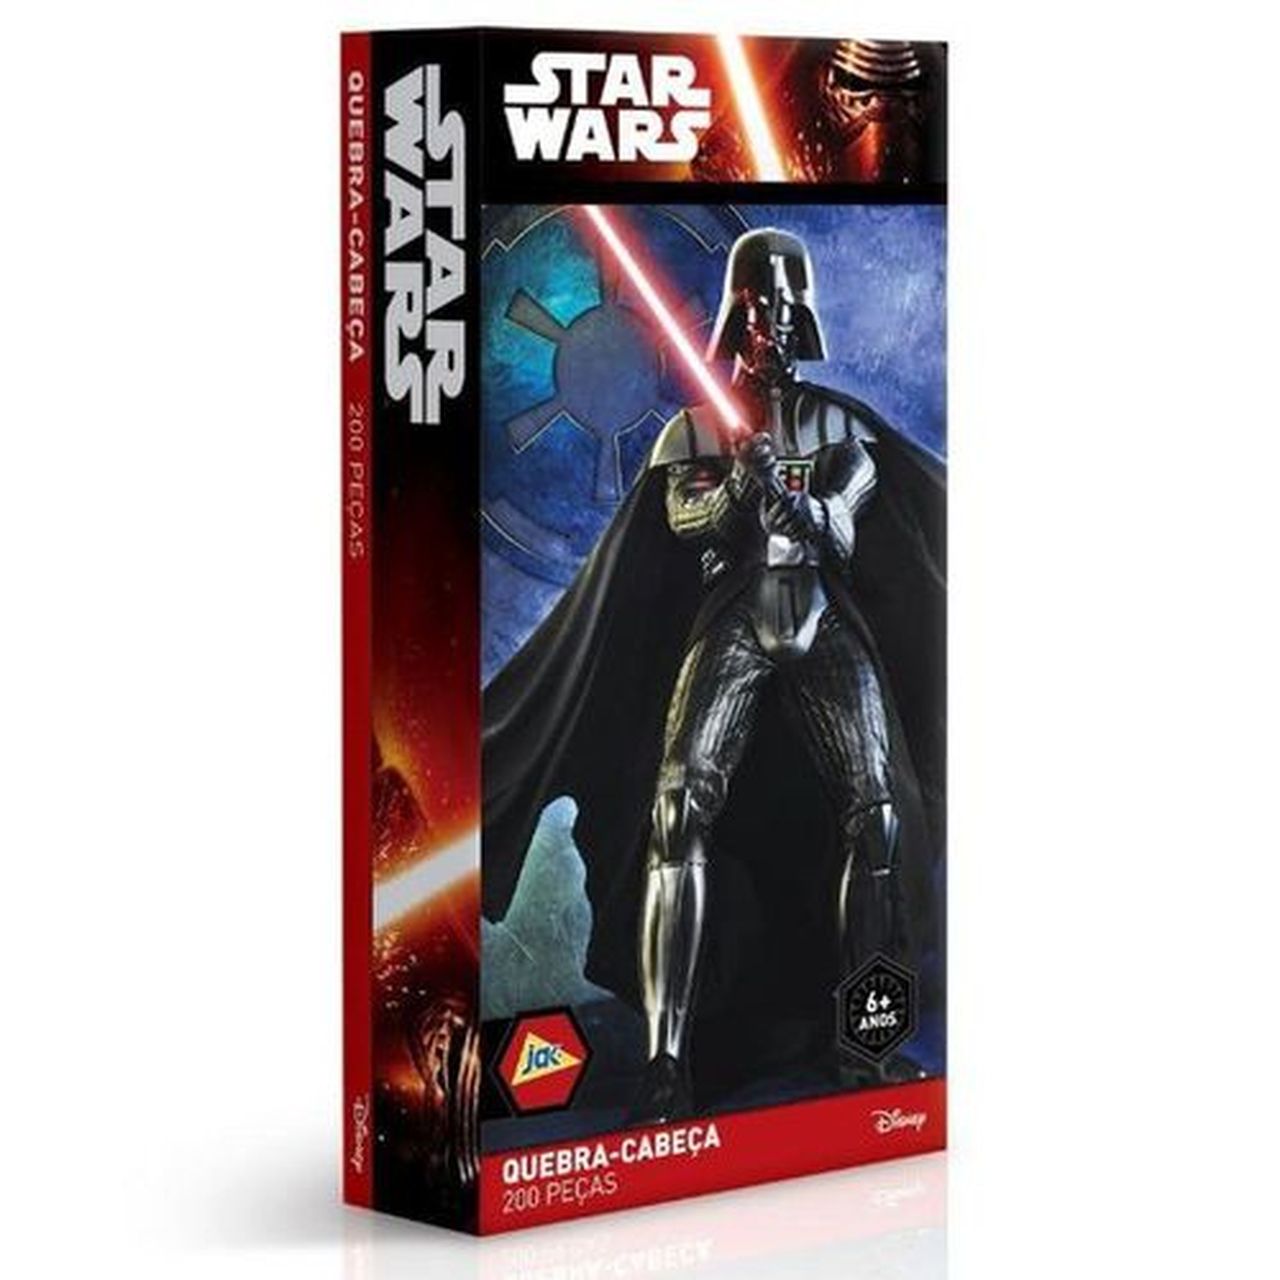 Quebra-Cabeça Darth Vader: Star Wars (Disney) 200 Peças - Jak